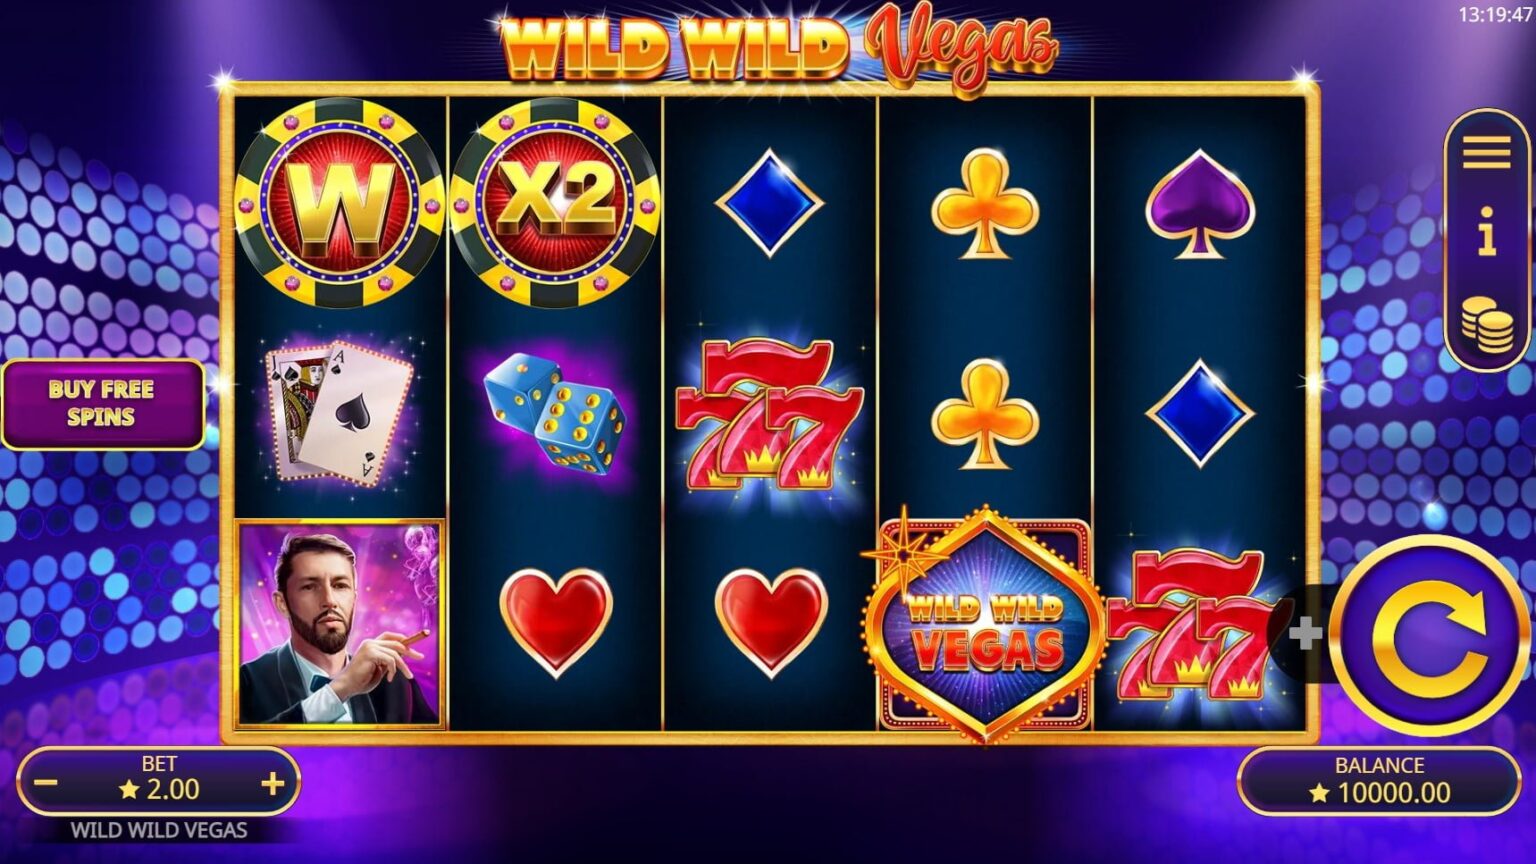 Go wild in Wild Wild Vegas! No Deposit Bonus